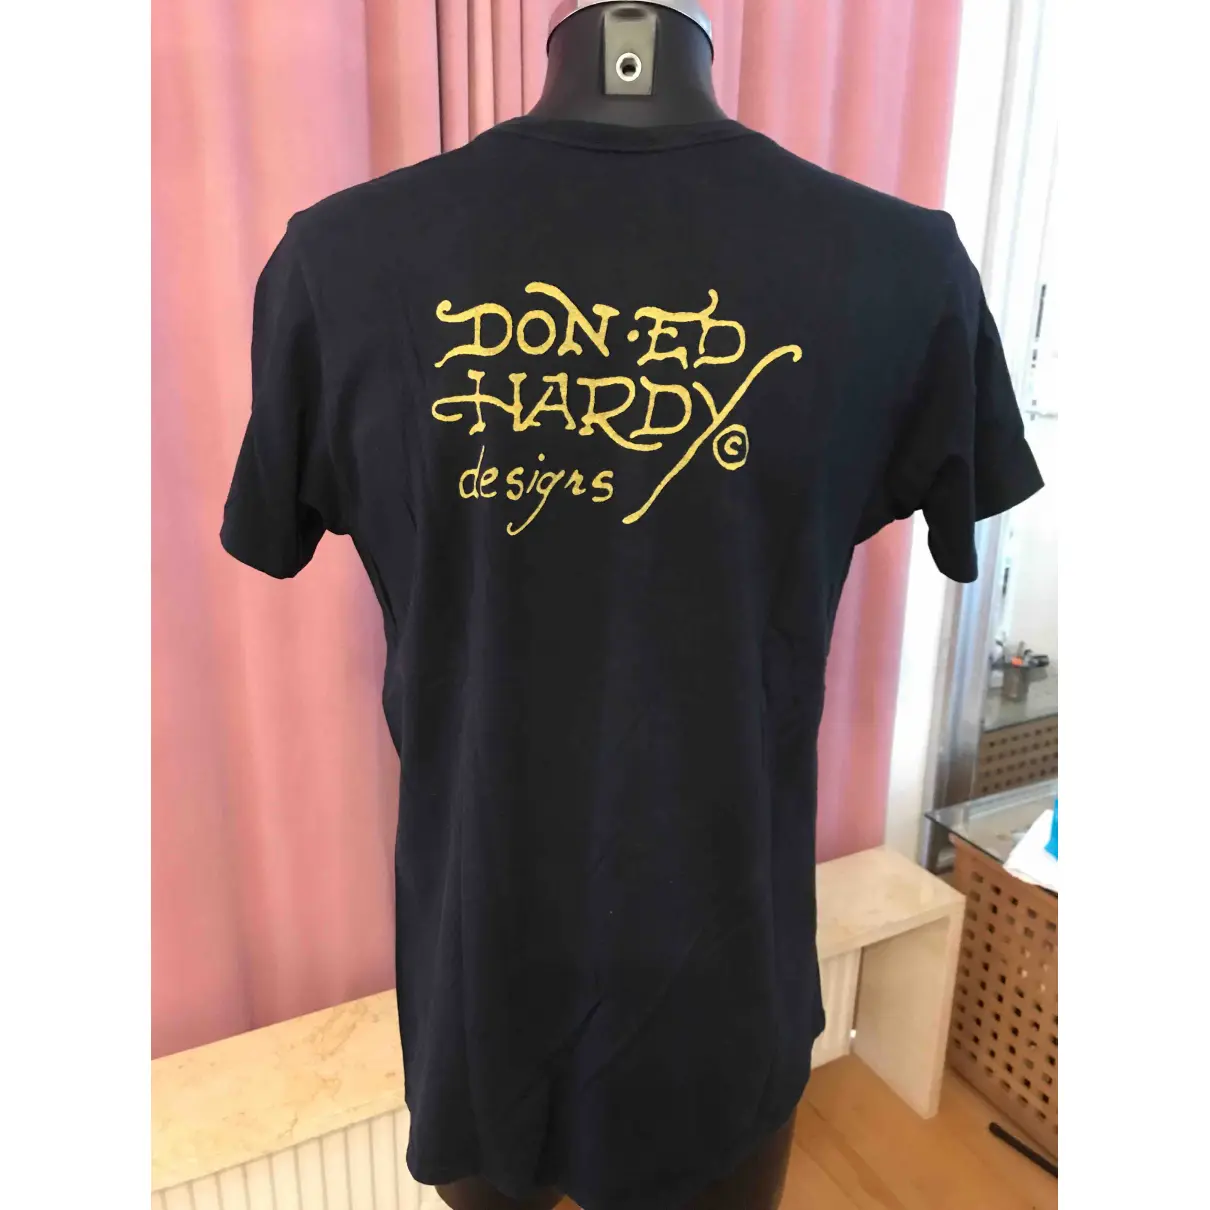 Buy ED HARDY T-shirt online